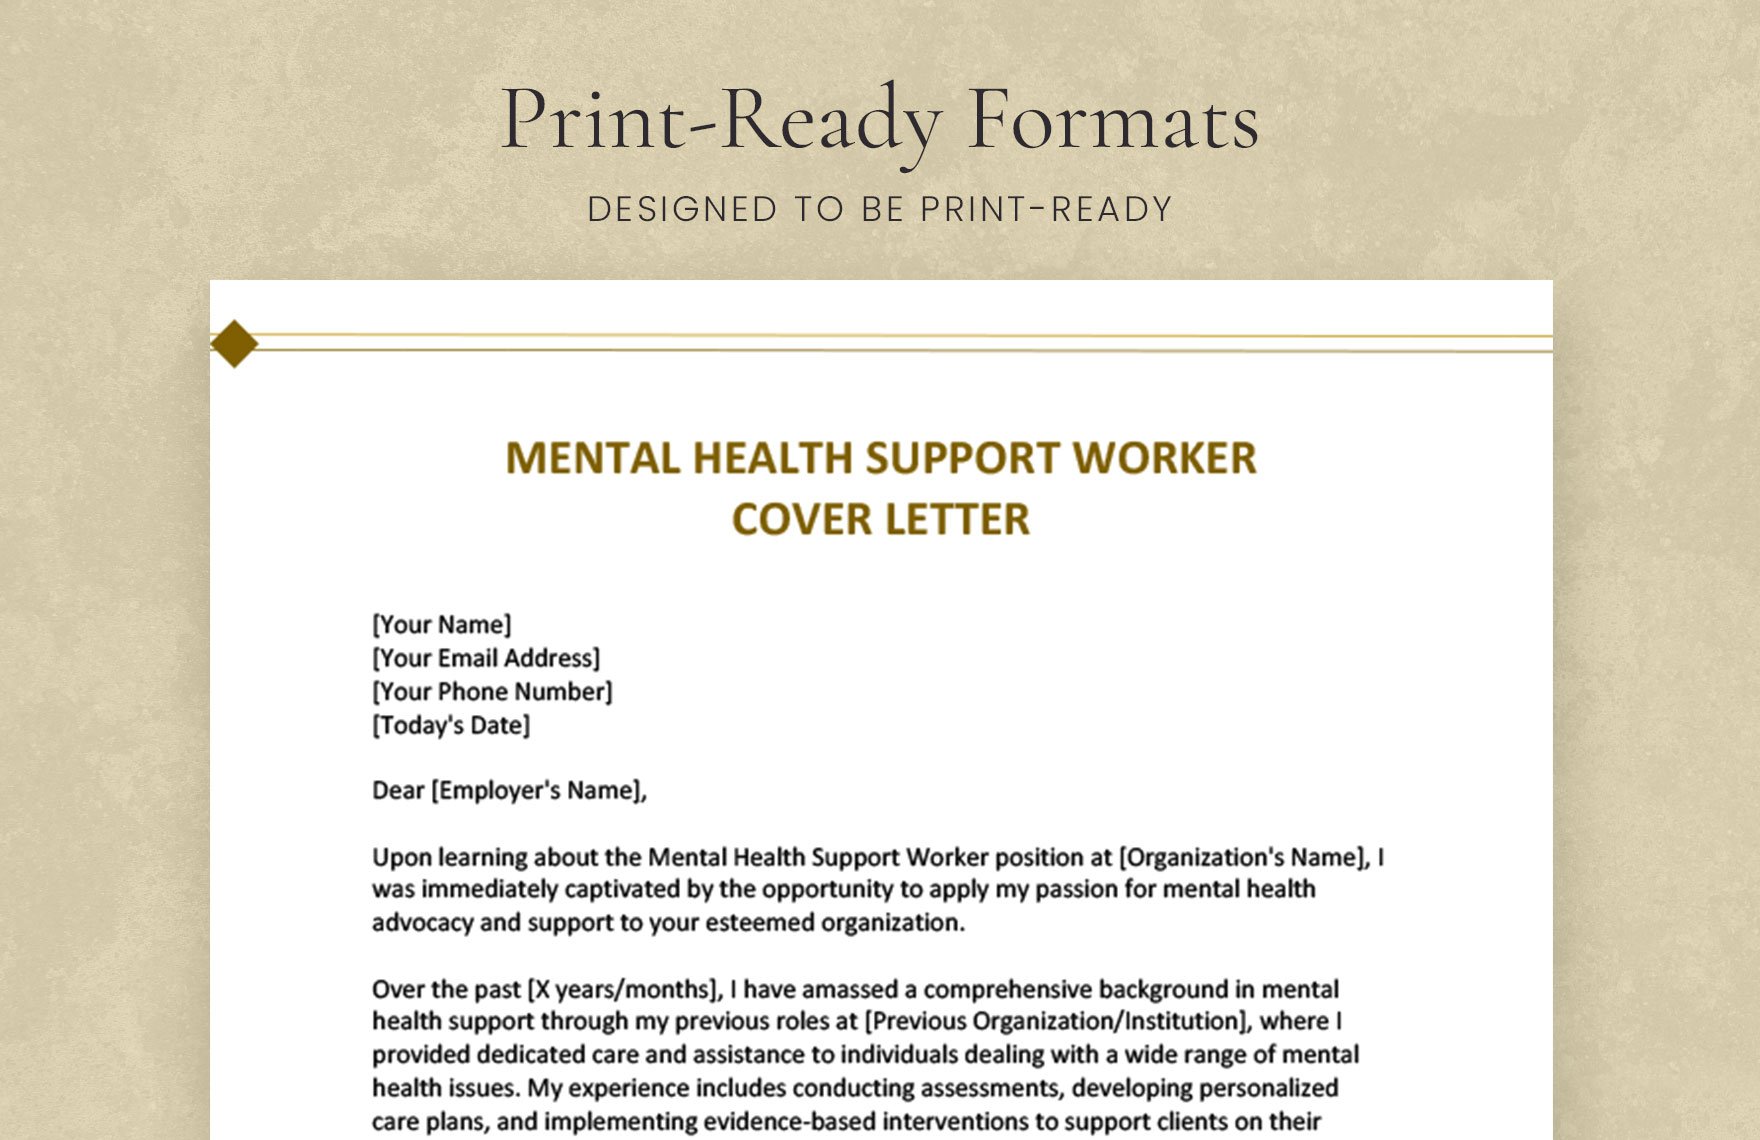 sample cover letter for mental health support worker